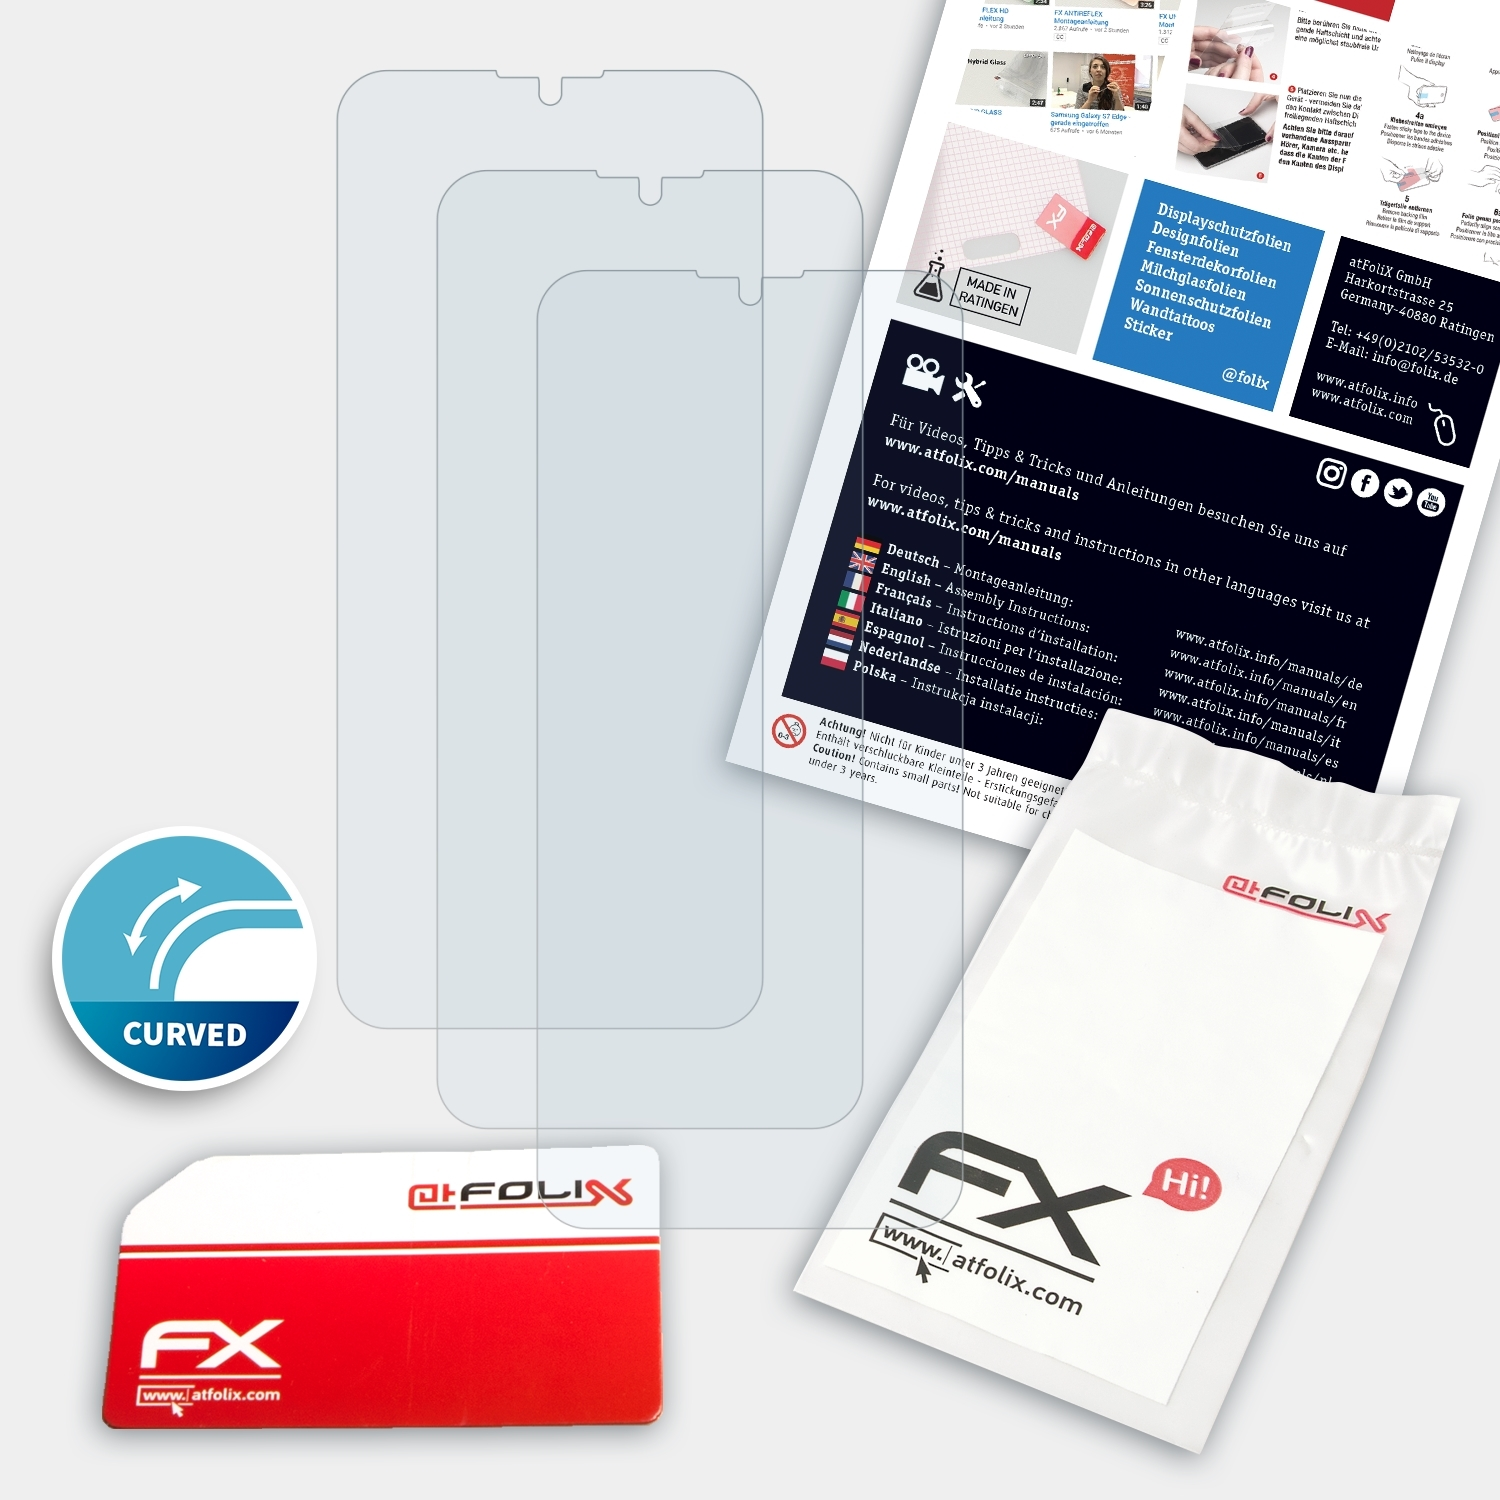 ATFOLIX 3x Motorola FX-ActiFleX Displayschutz(für Moto G30)